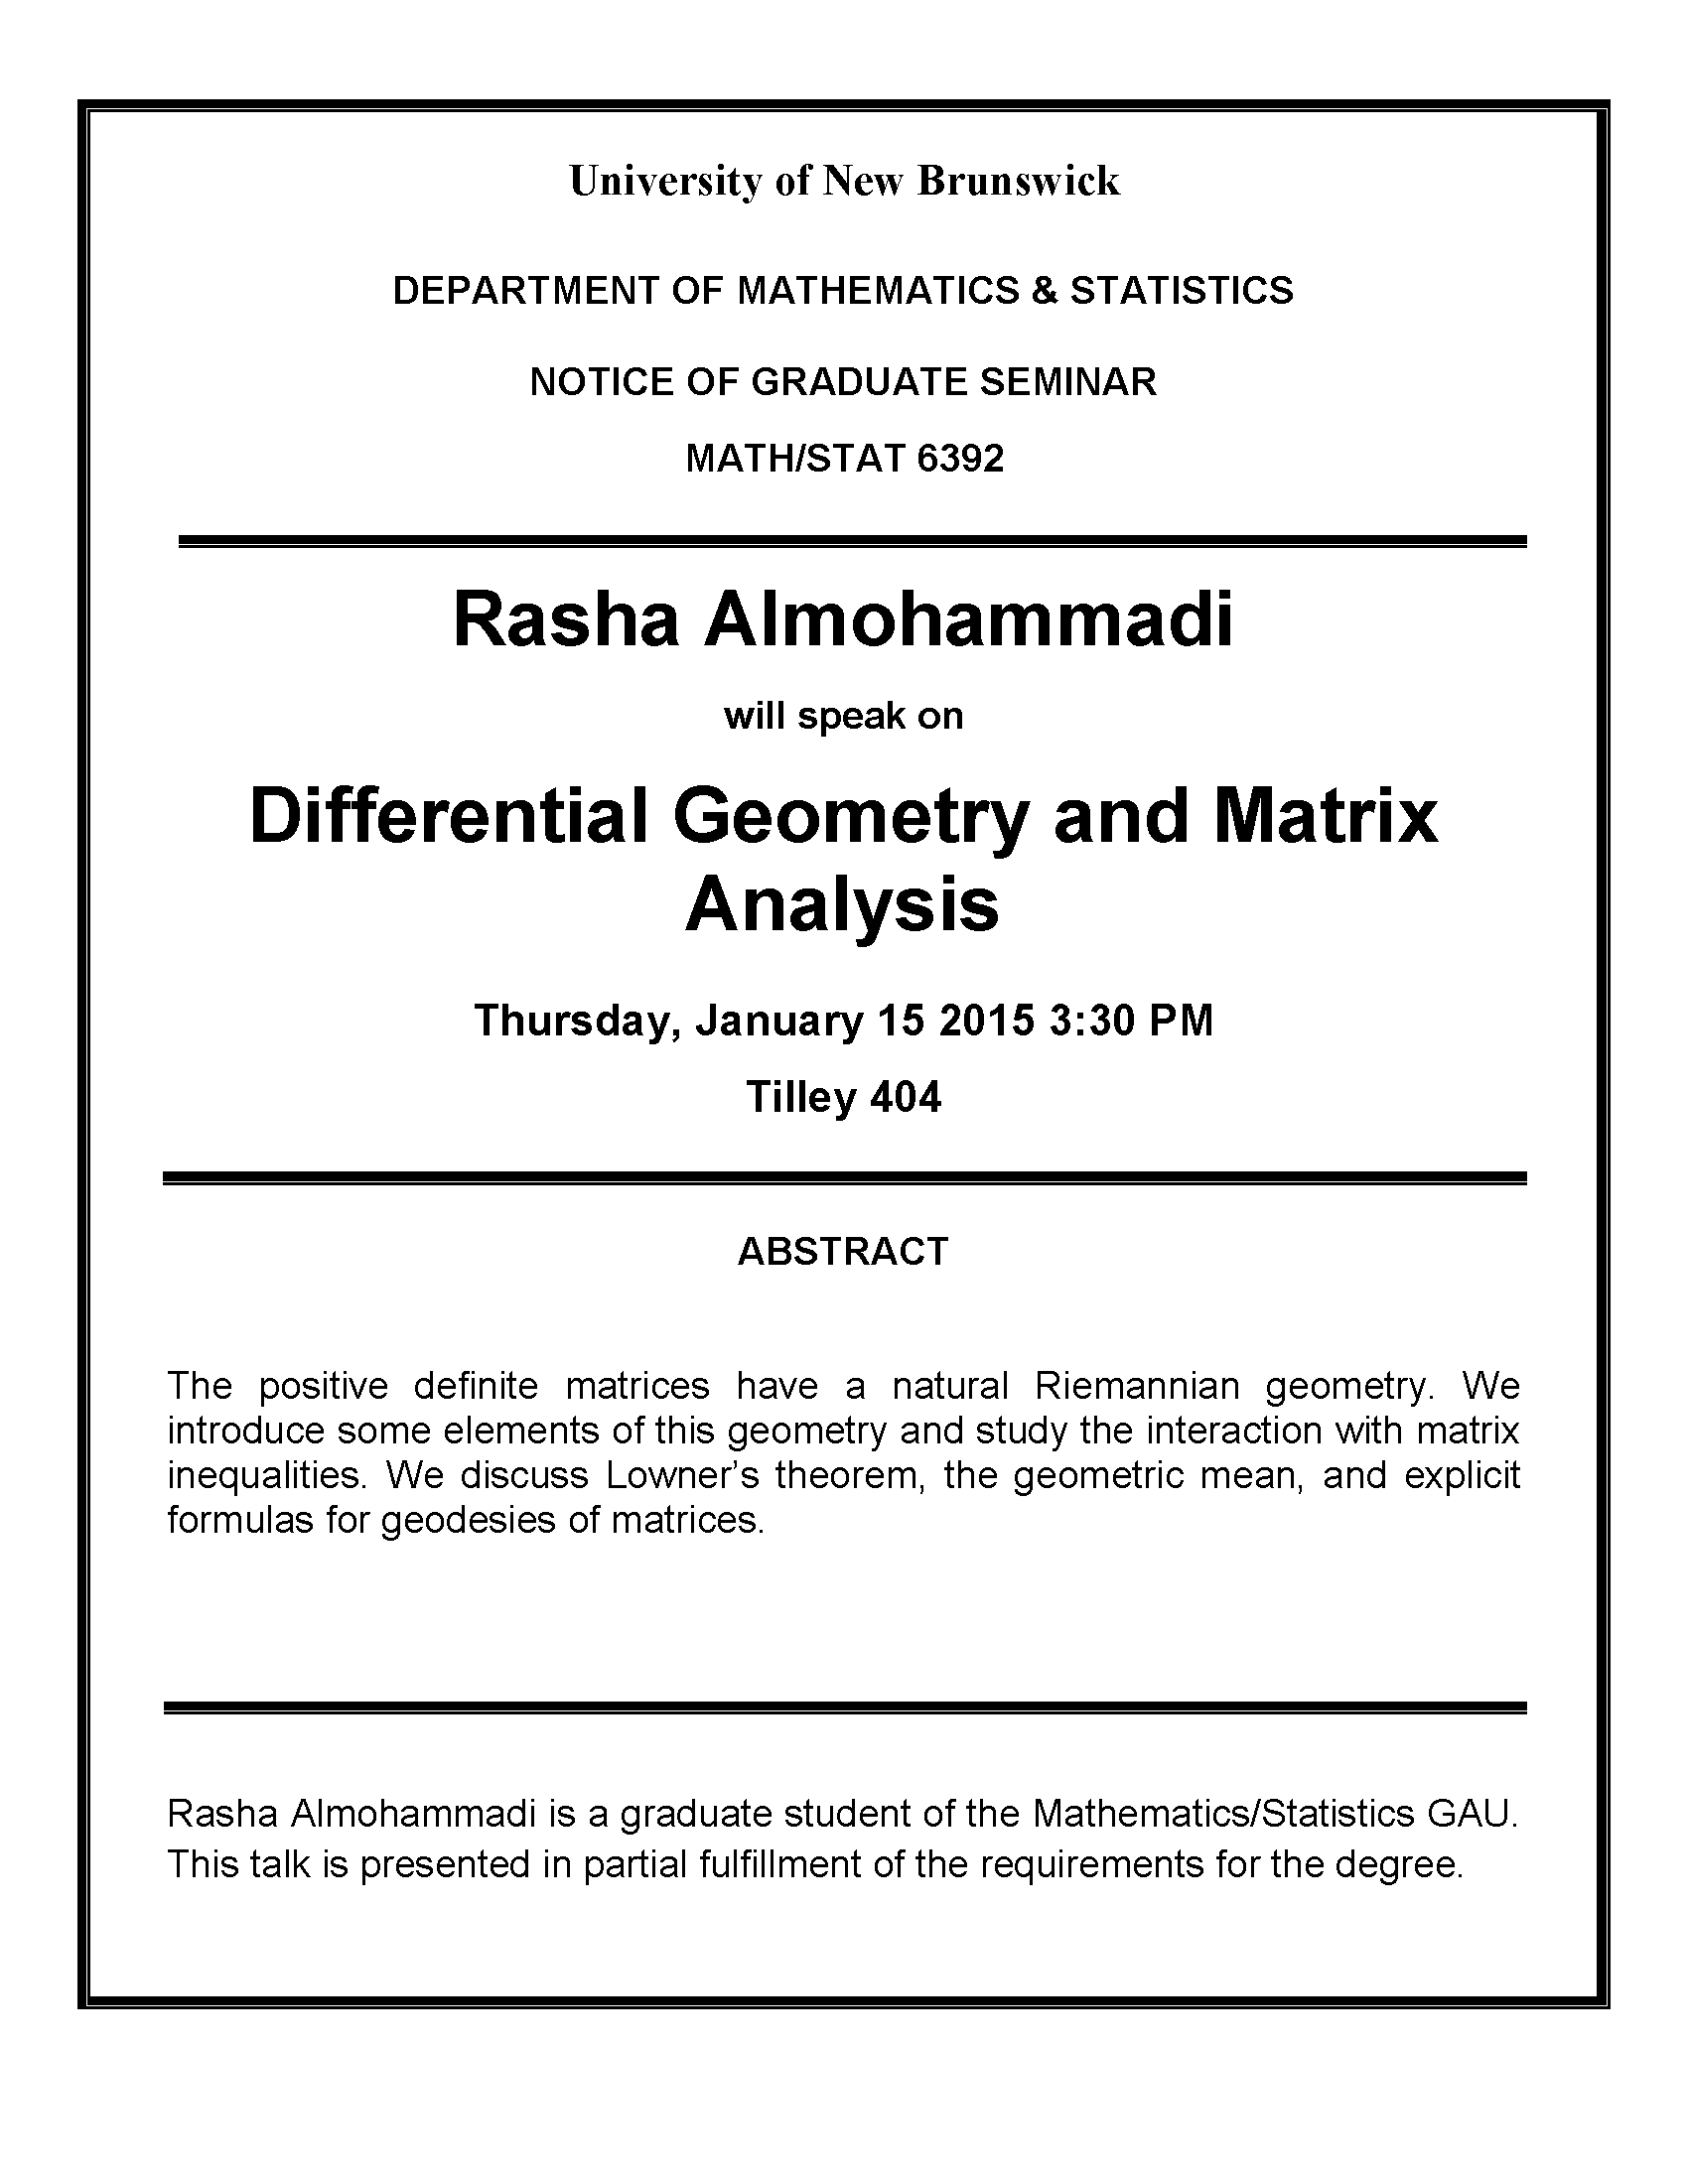 Notice of Graduate Seminar: Differential Geometry and Matrix Analysis